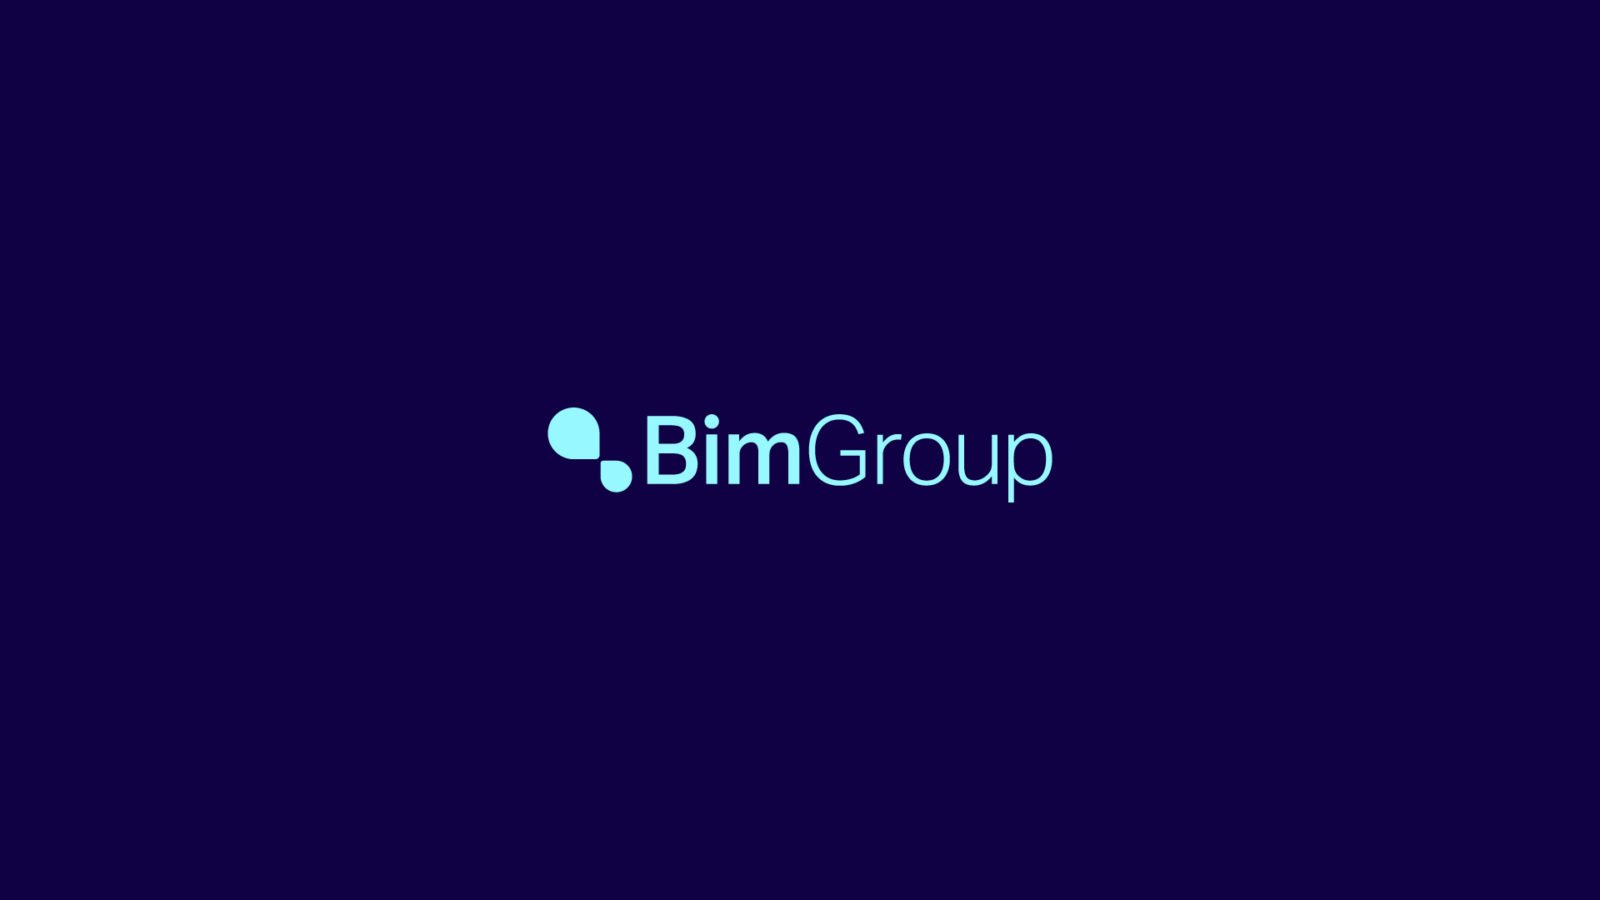 Bim Group Professional Services Brand Identity Wordmark by Bullhorn Creative